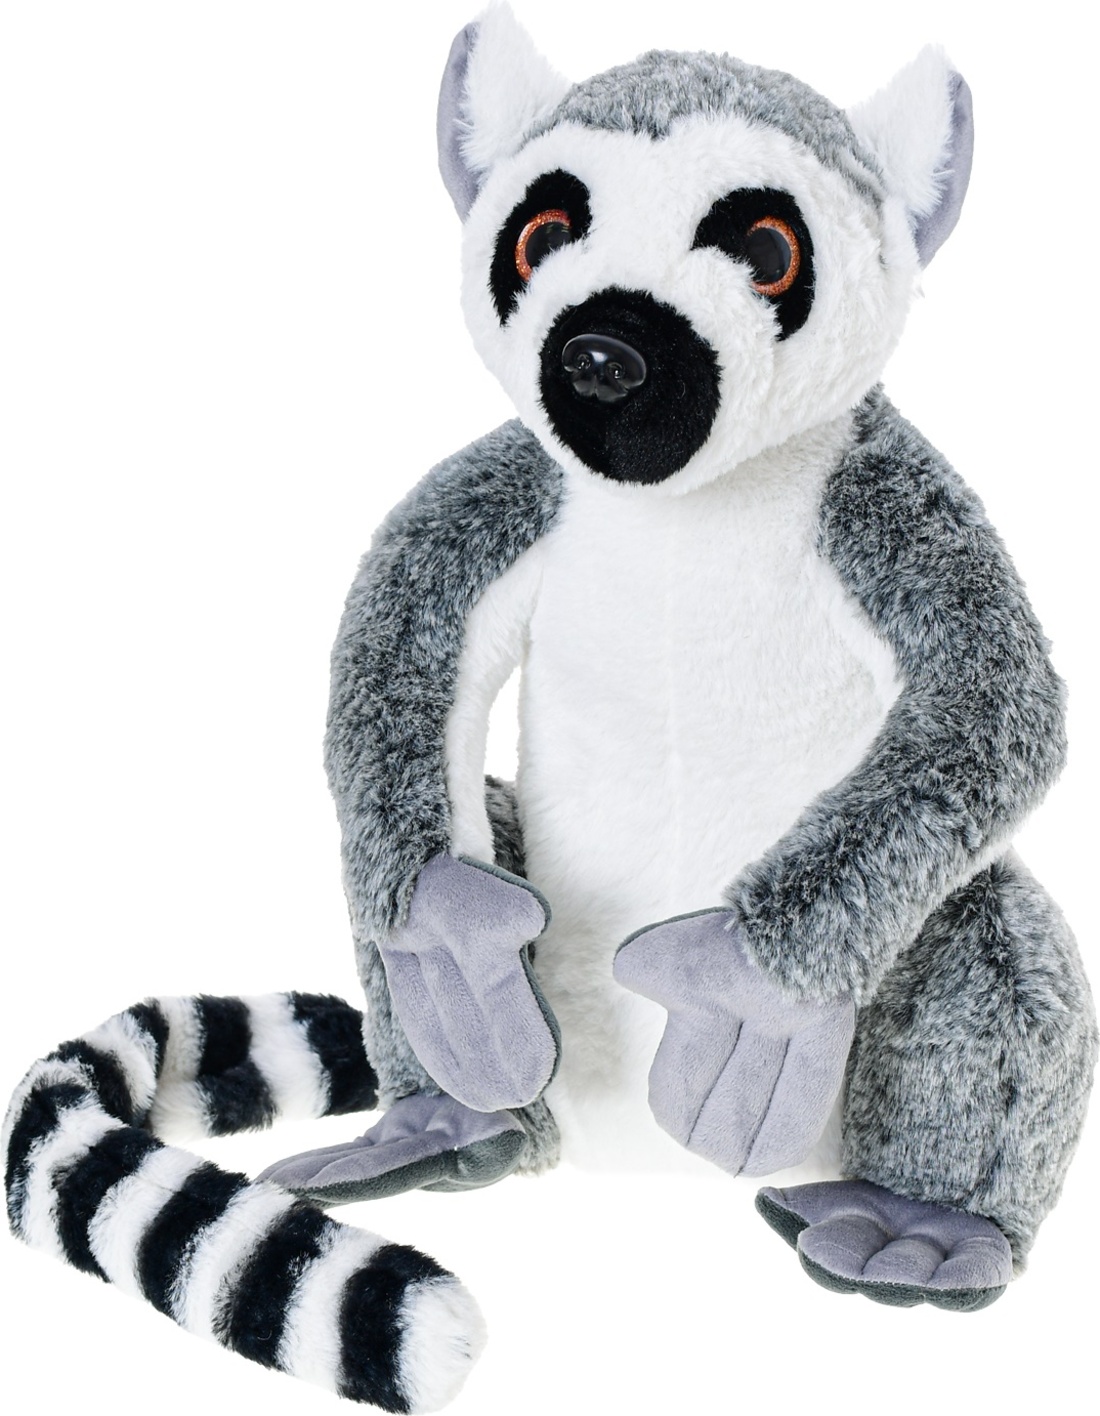 Lemur plyšový 25cm